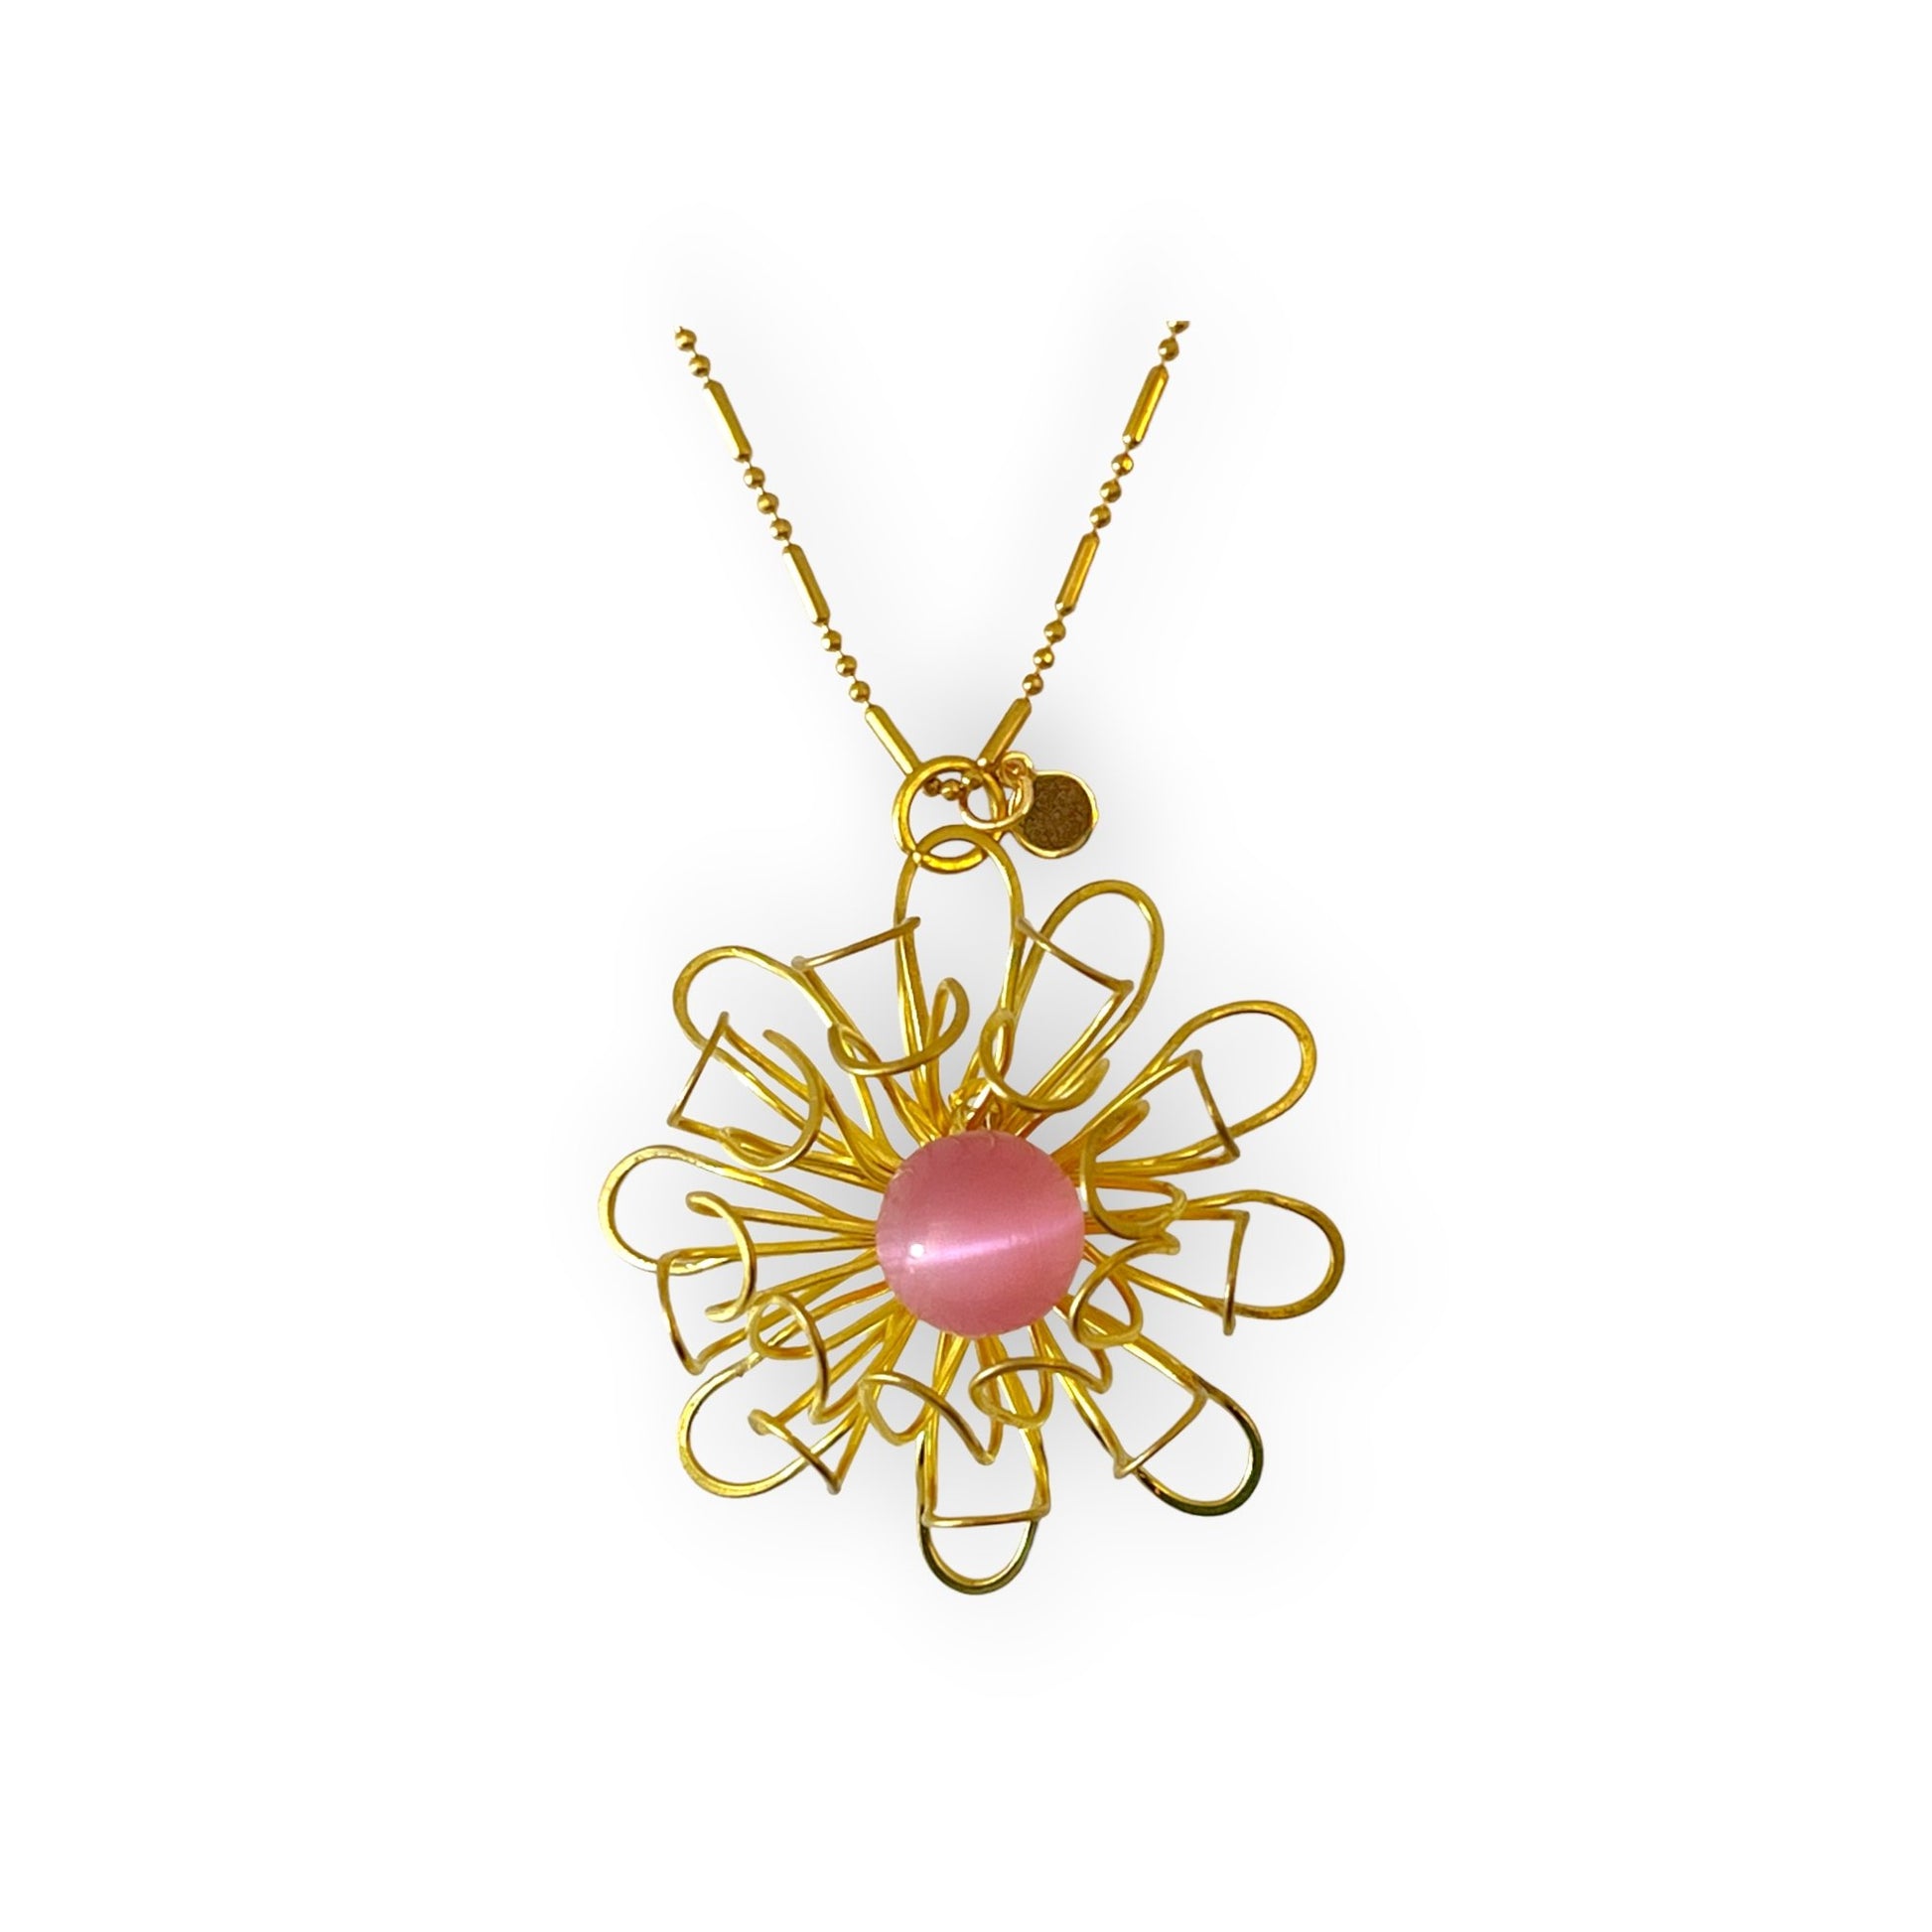 Floral inspired gemstone pendant necklace - Sundara Joon